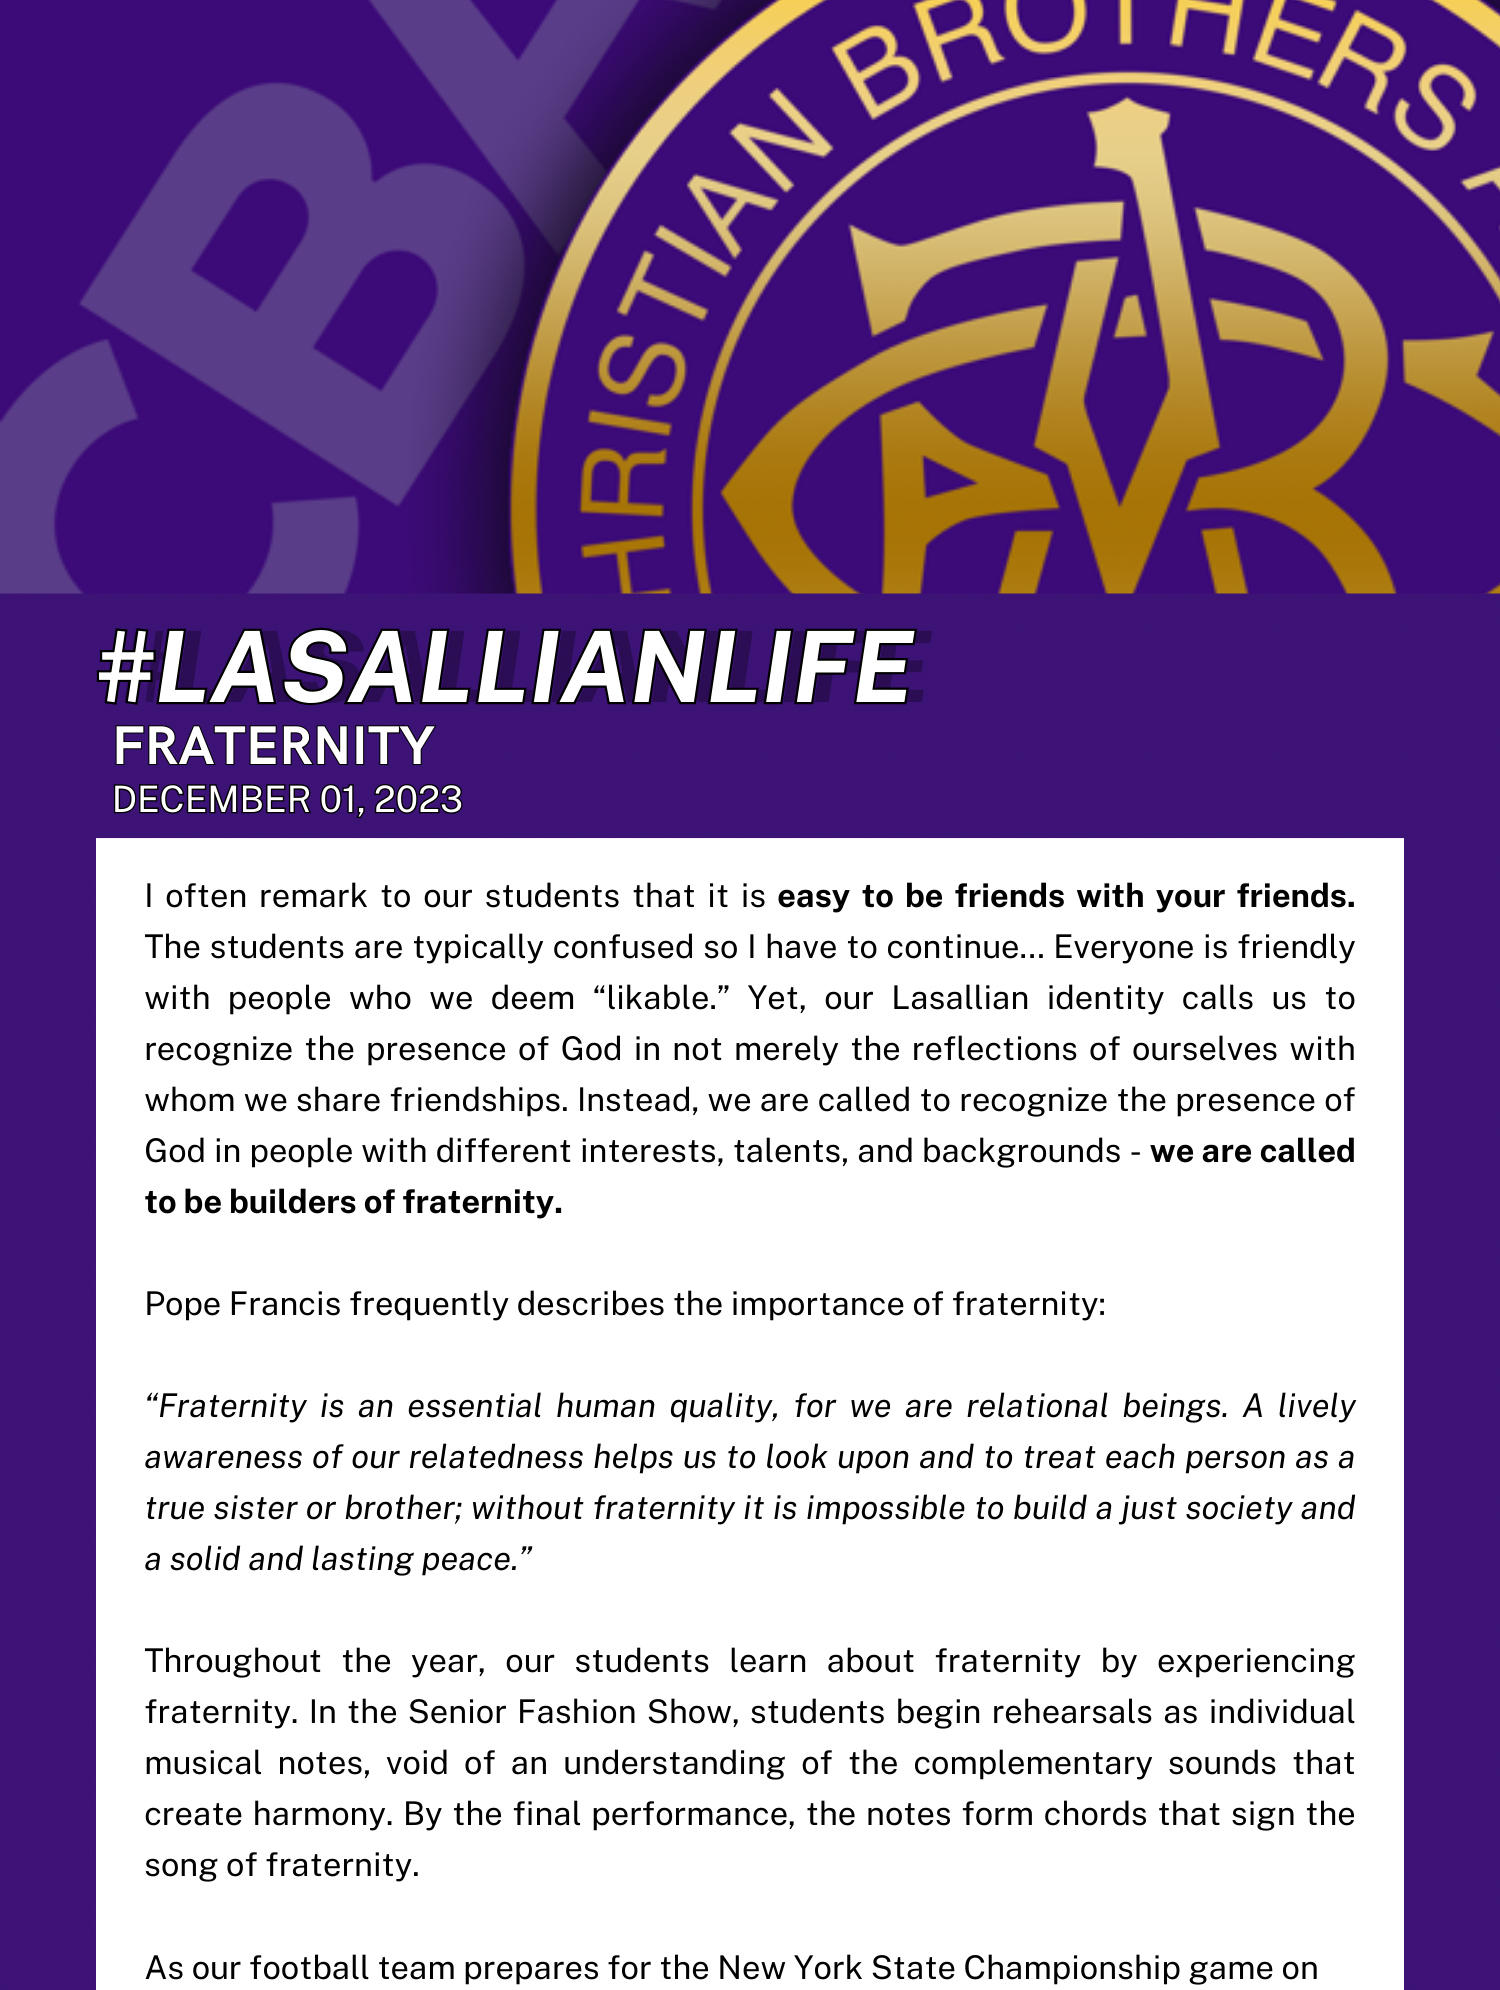 #LasallianLife : Fraternity